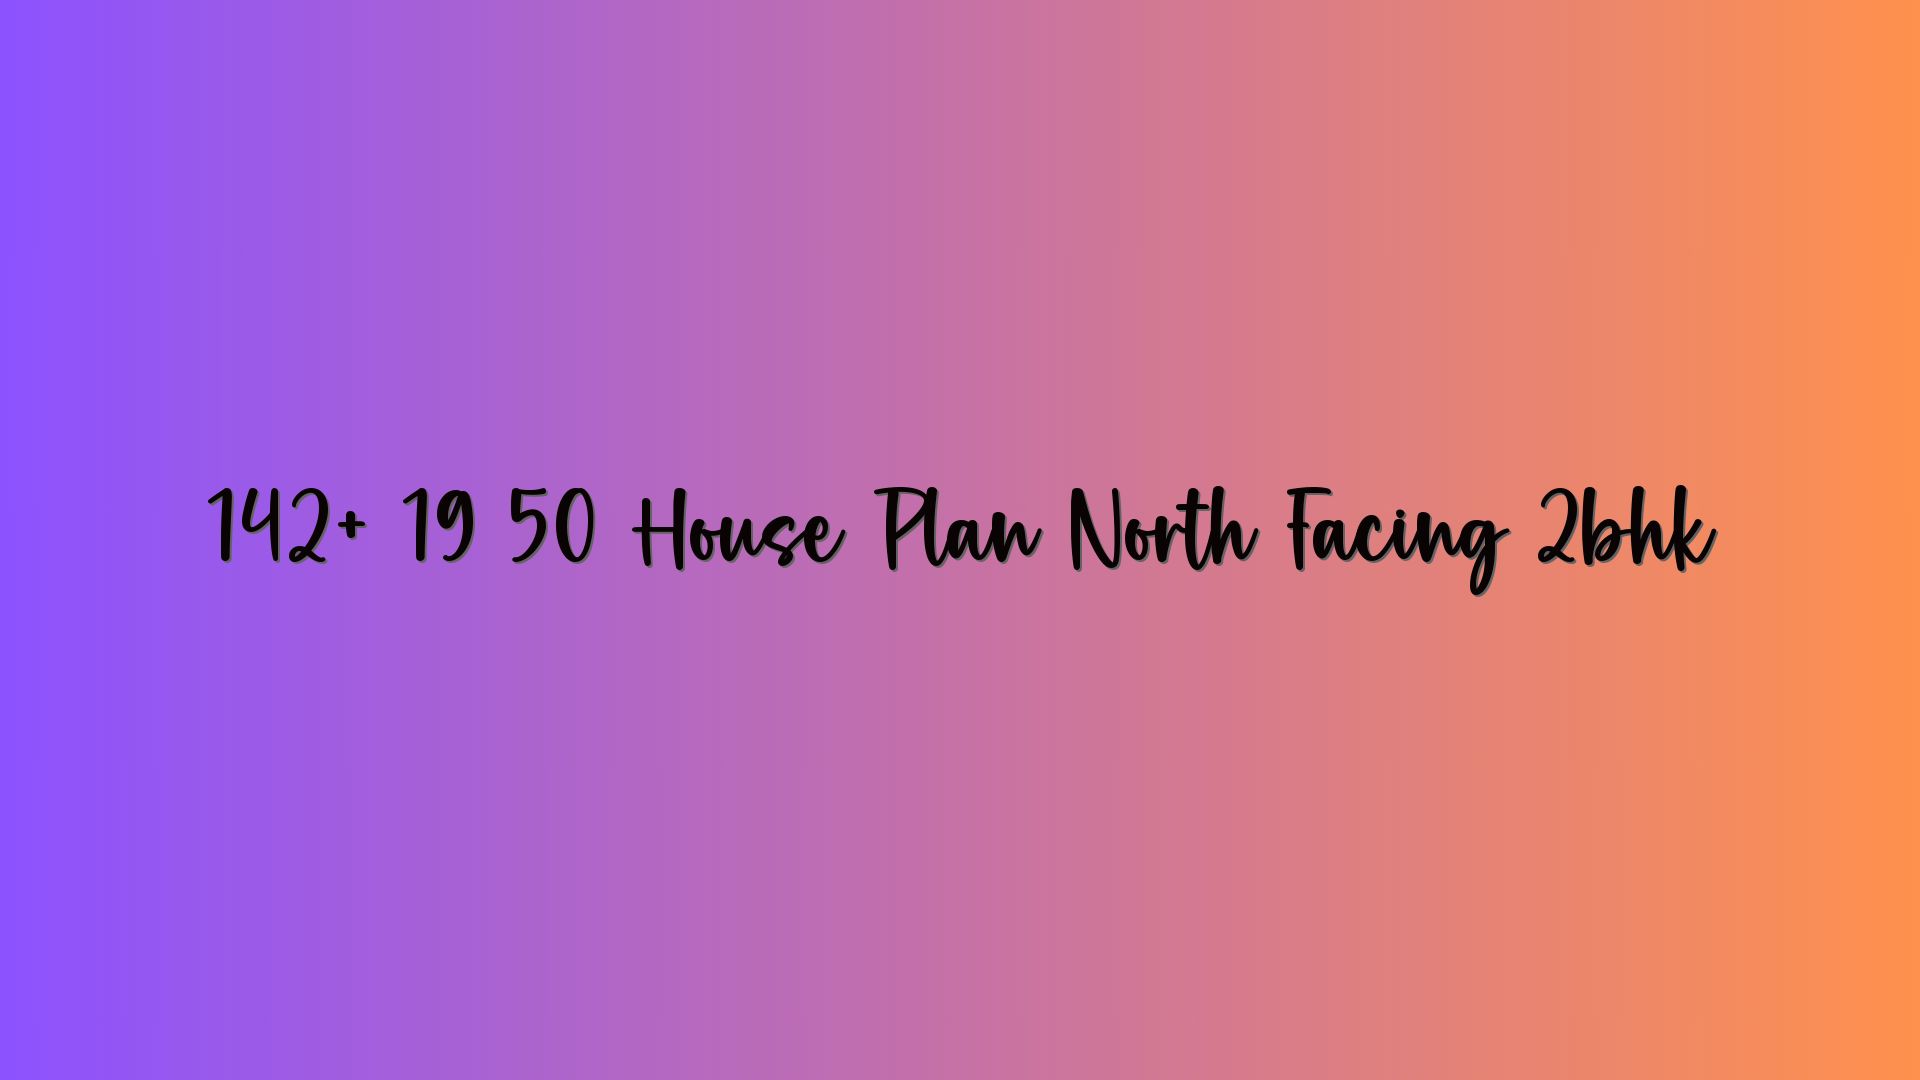 142+ 19 50 House Plan North Facing 2bhk